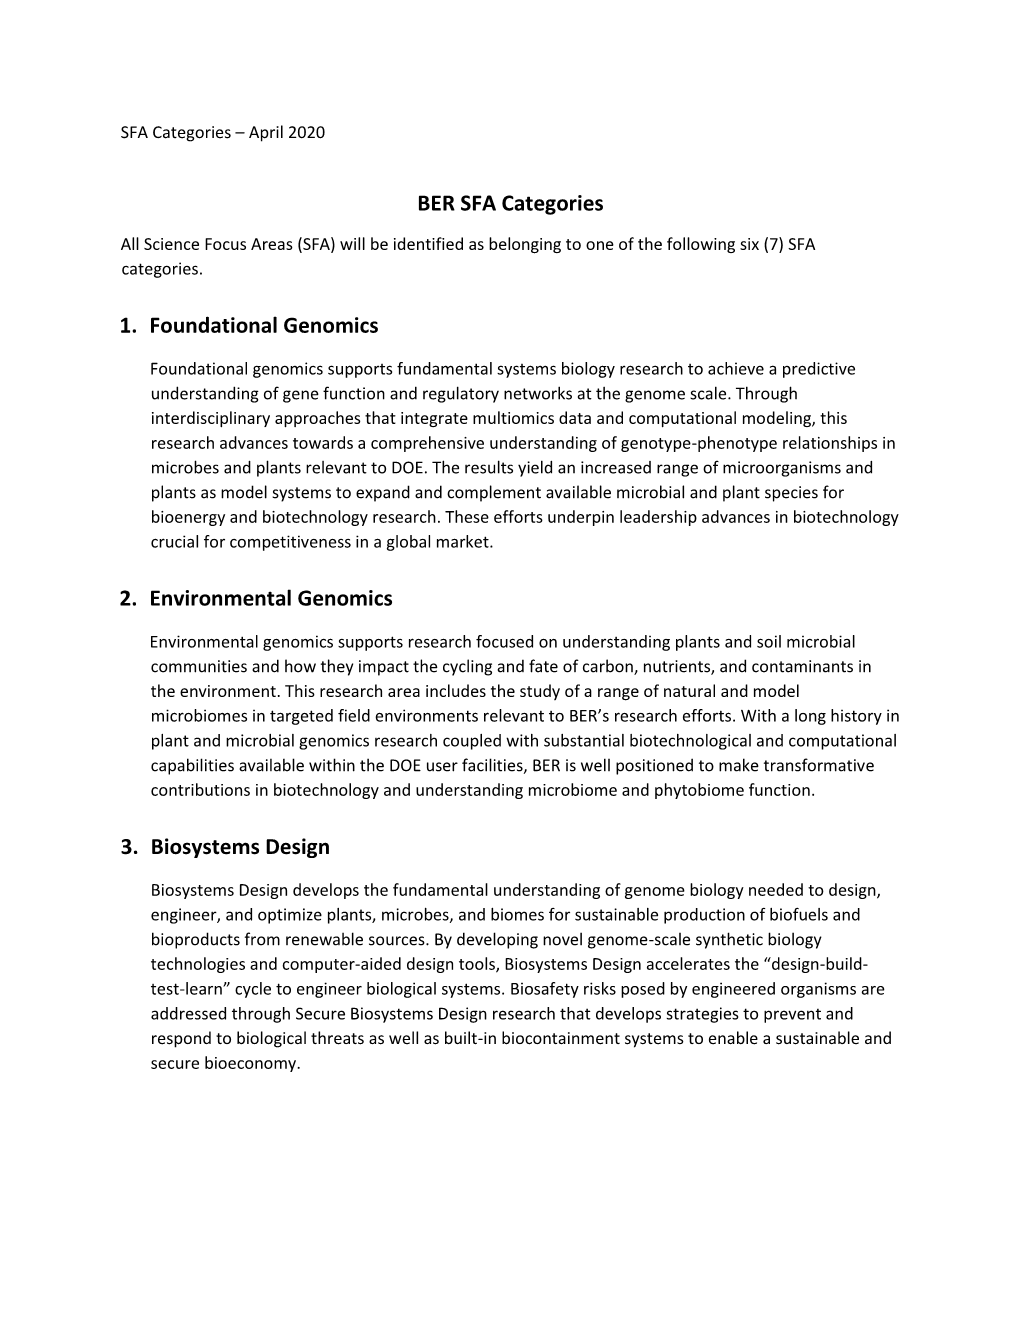 BER SFA Categories 1. Foundational Genomics 2. Environmental Genomics 3. Biosystems Design